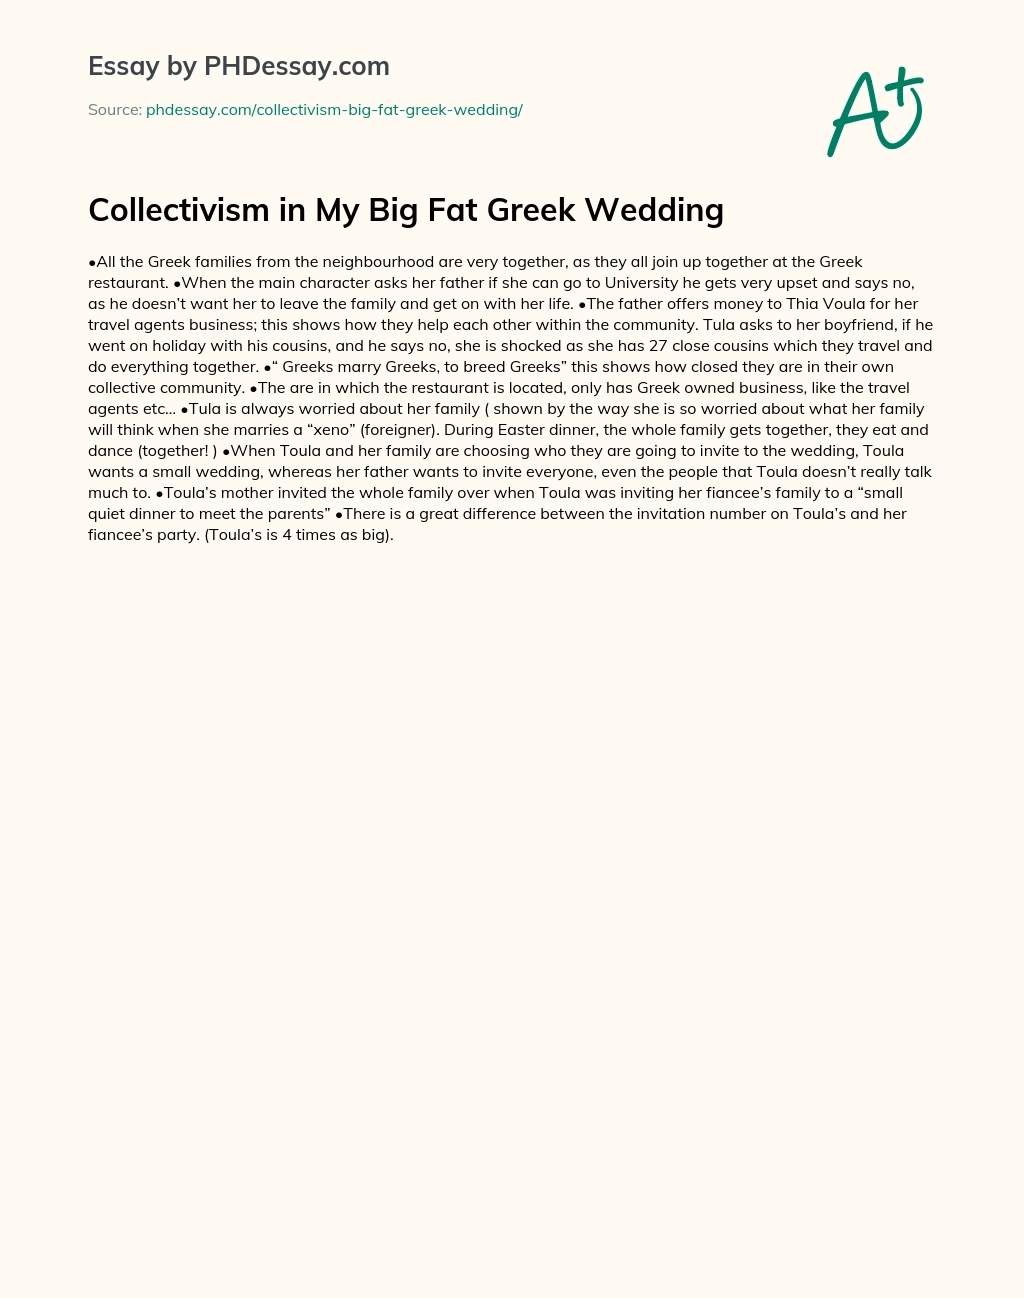 Collectivism in My Big Fat Greek Wedding essay